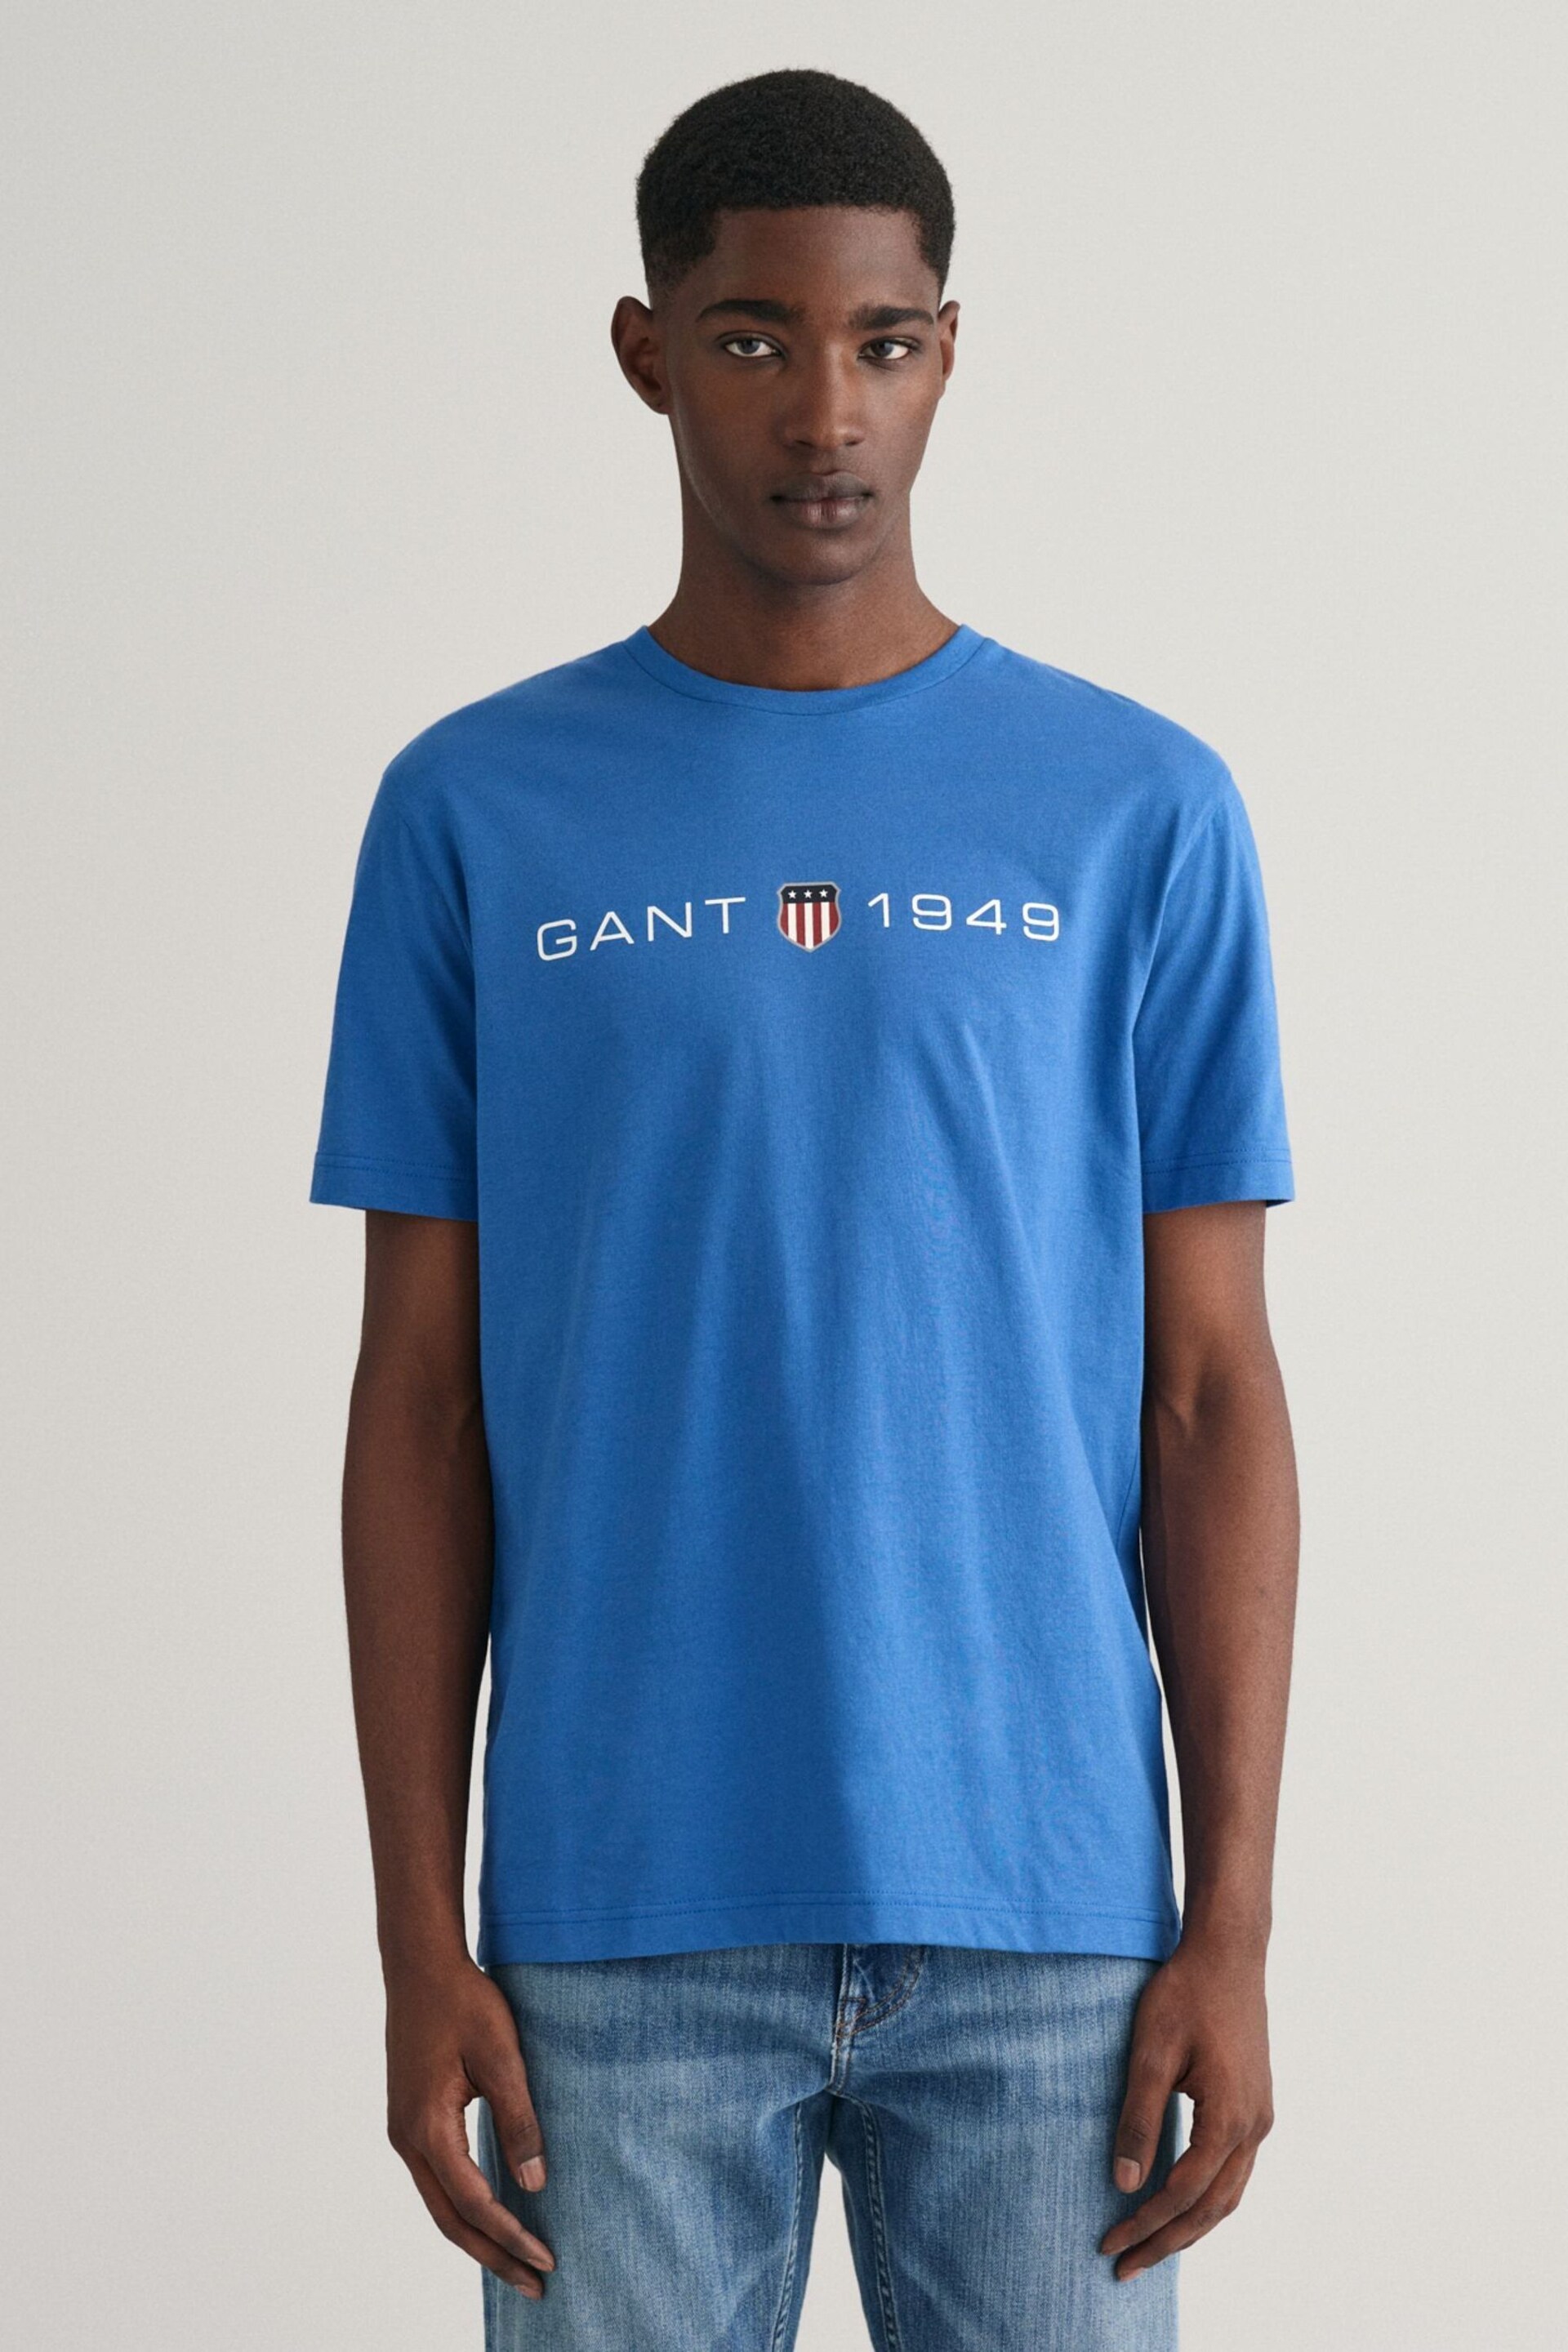 GANT Printed Graphic T-Shirt - Image 1 of 5